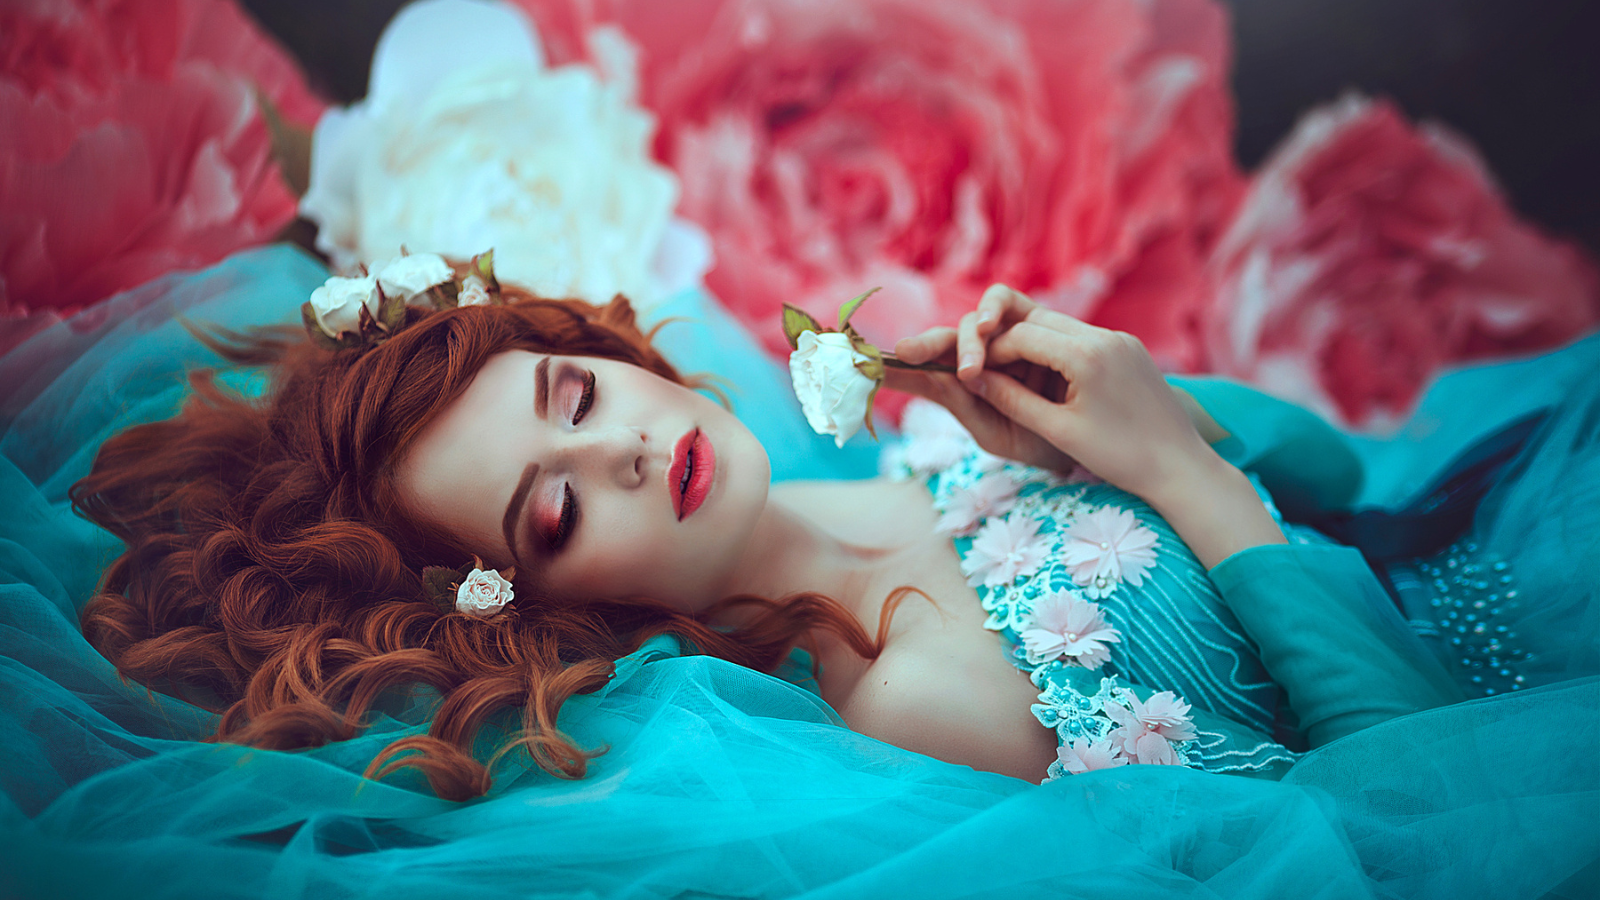 A woman wearing a princess dress and posing like Sleeping Beauty.